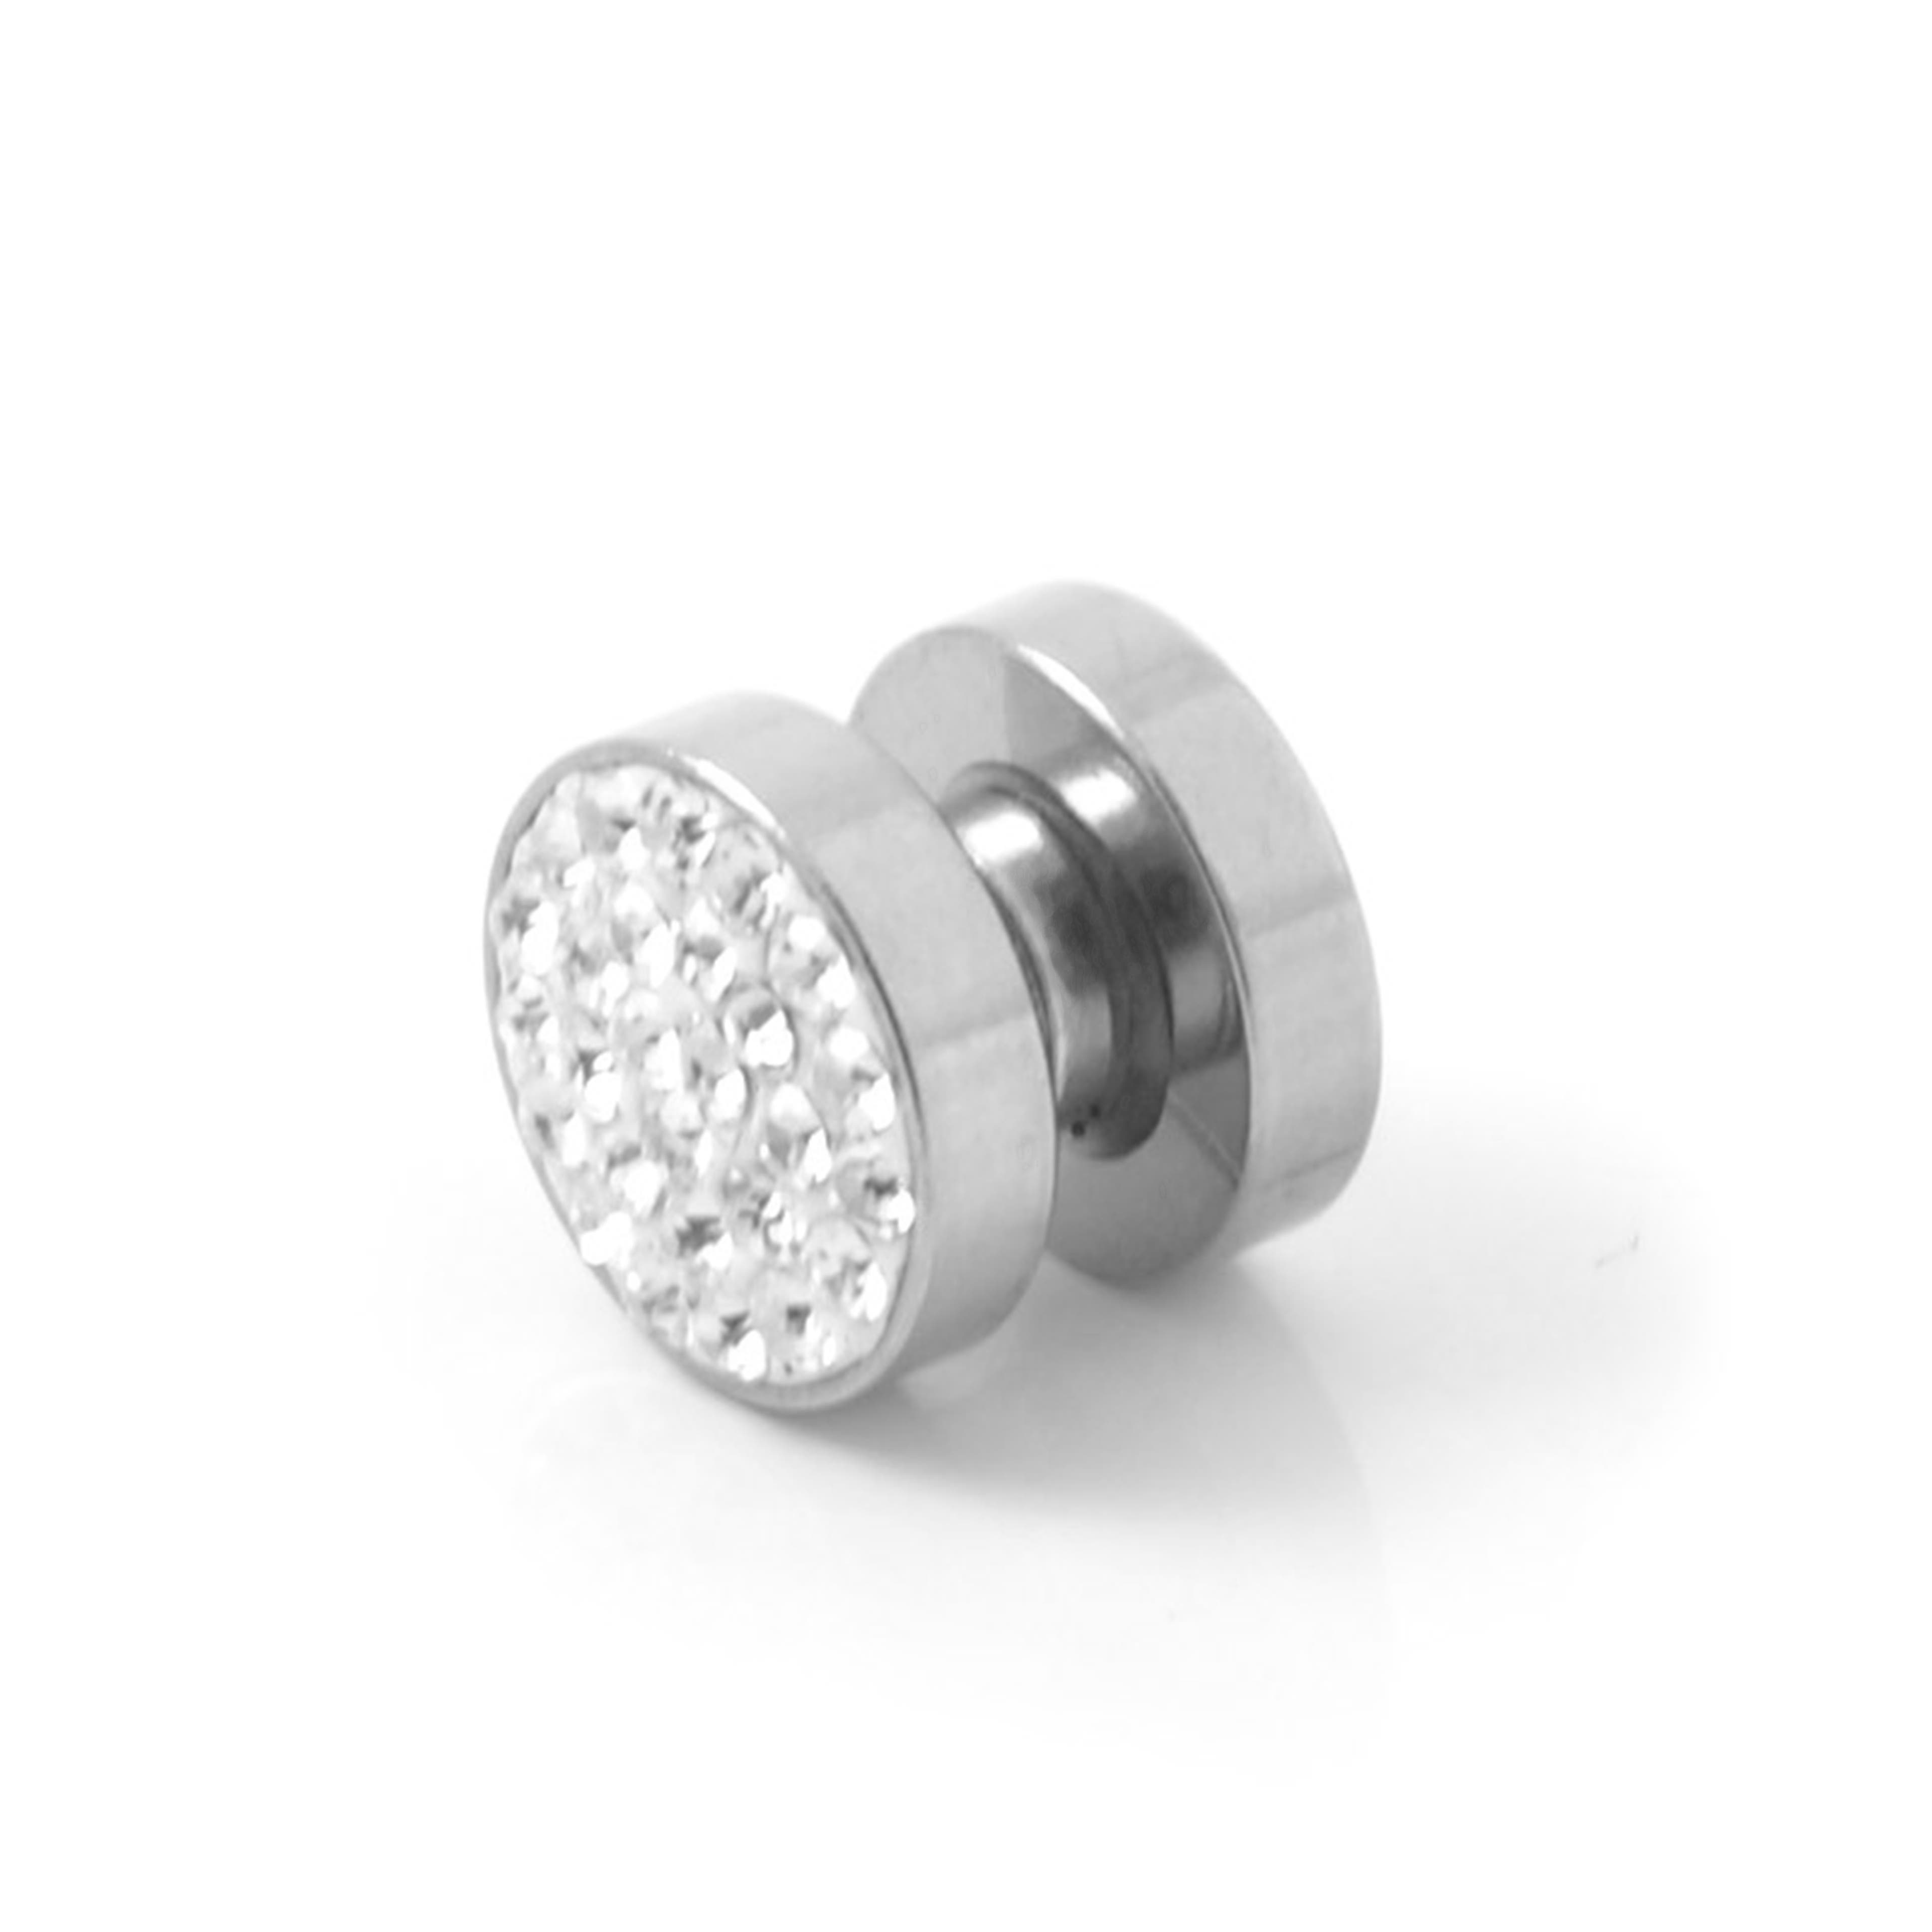 10 mm Round Zirconia Magnetic Earring